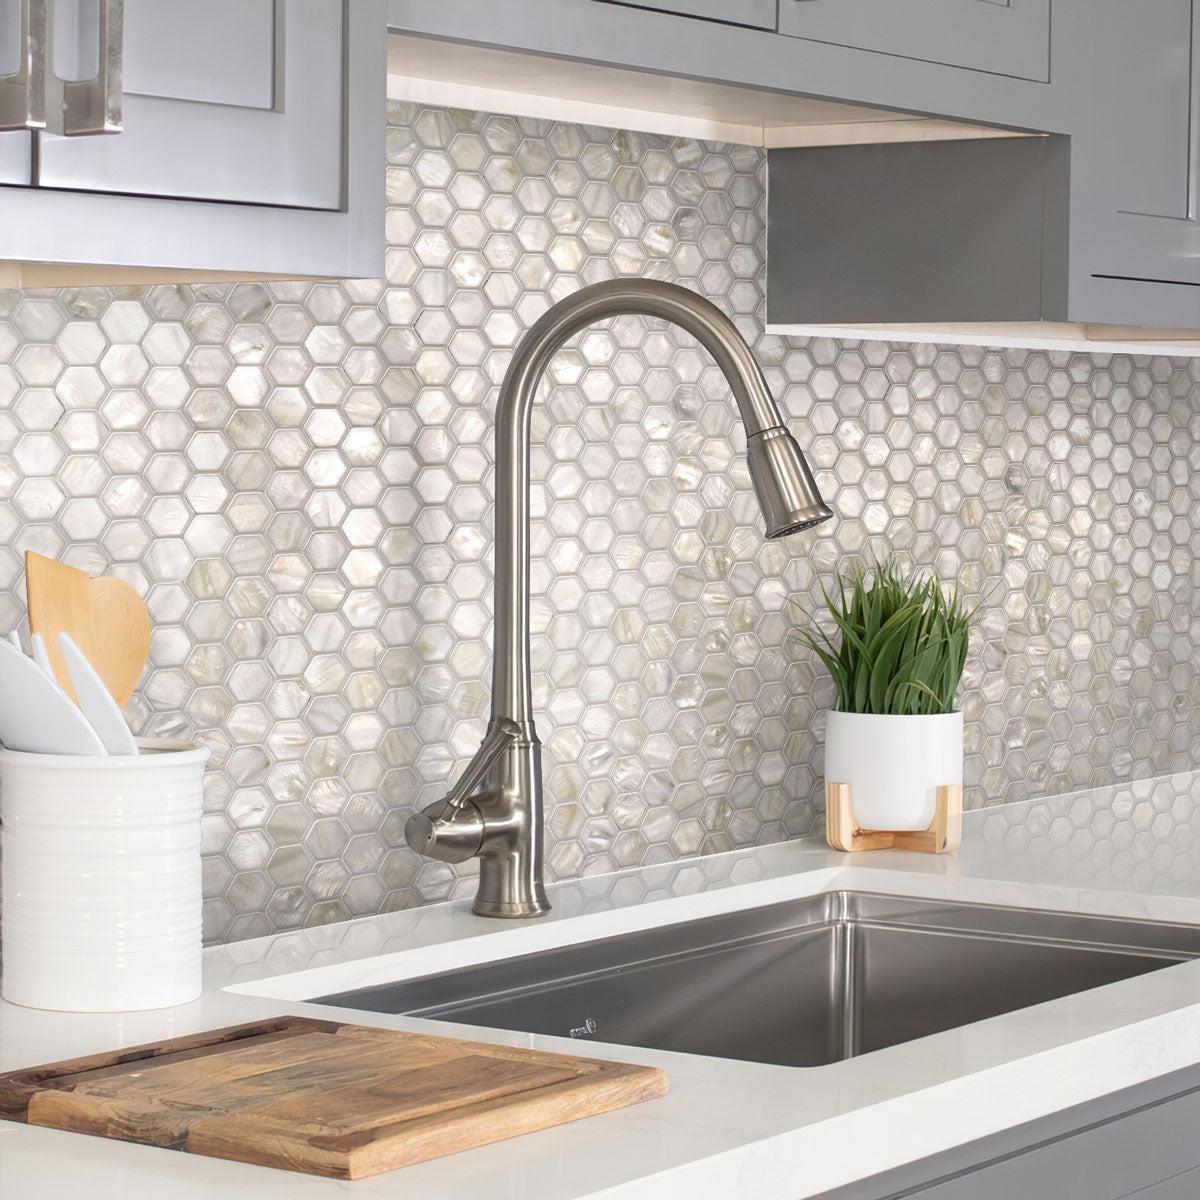 Pure White Mother Of Pearl Hexagon Mosaic Tile Kitchen Backsplash